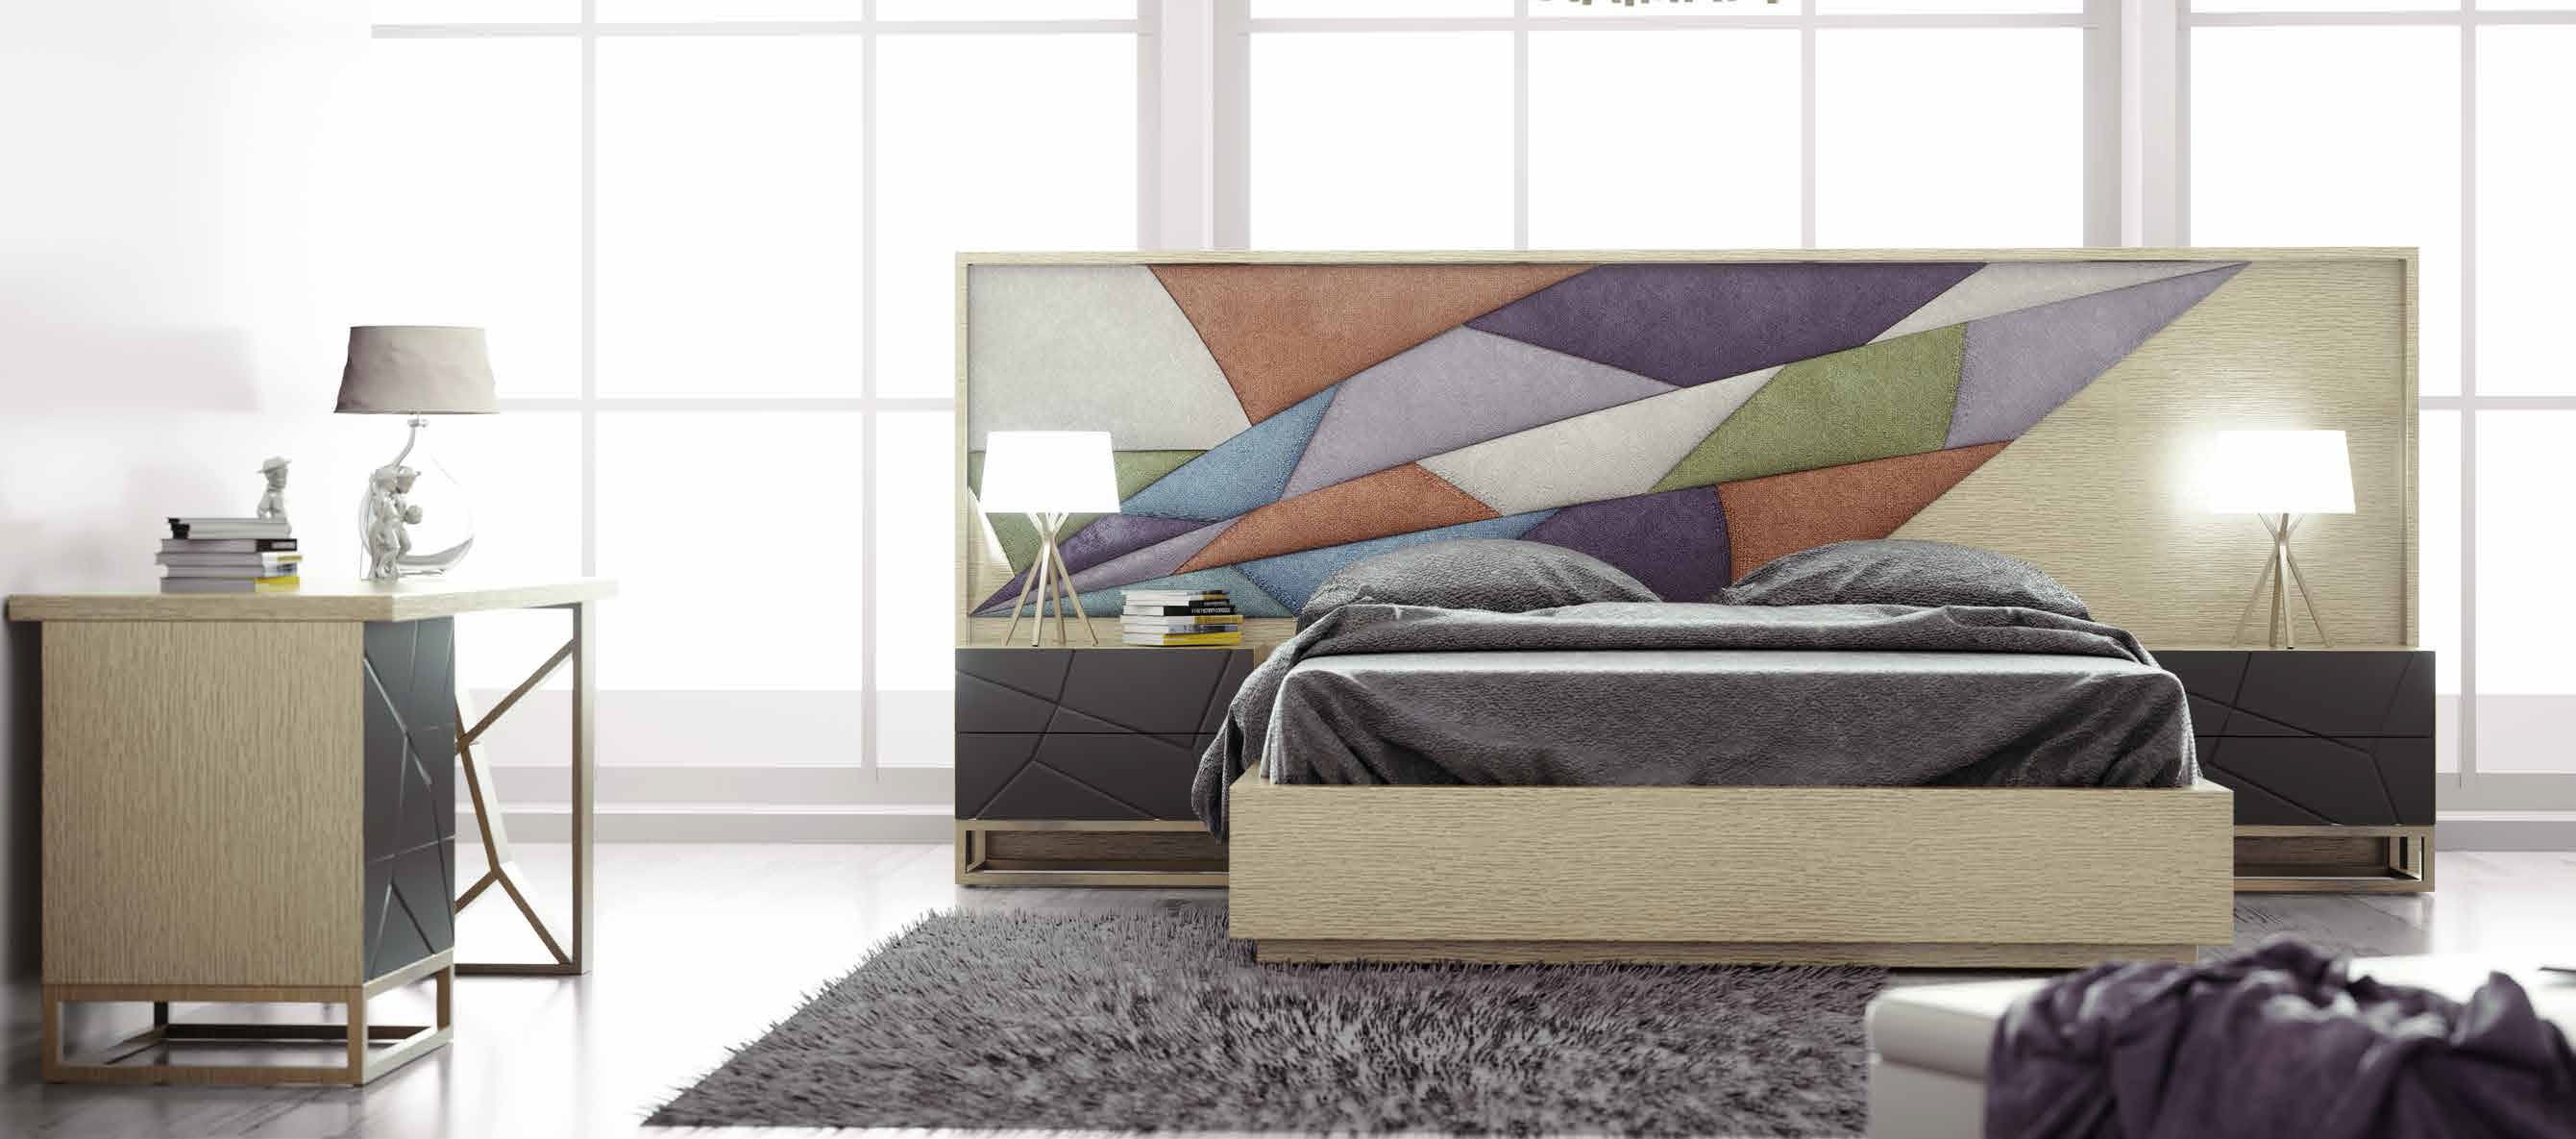 Brands Franco Furniture Bedrooms vol2, Spain DOR 26